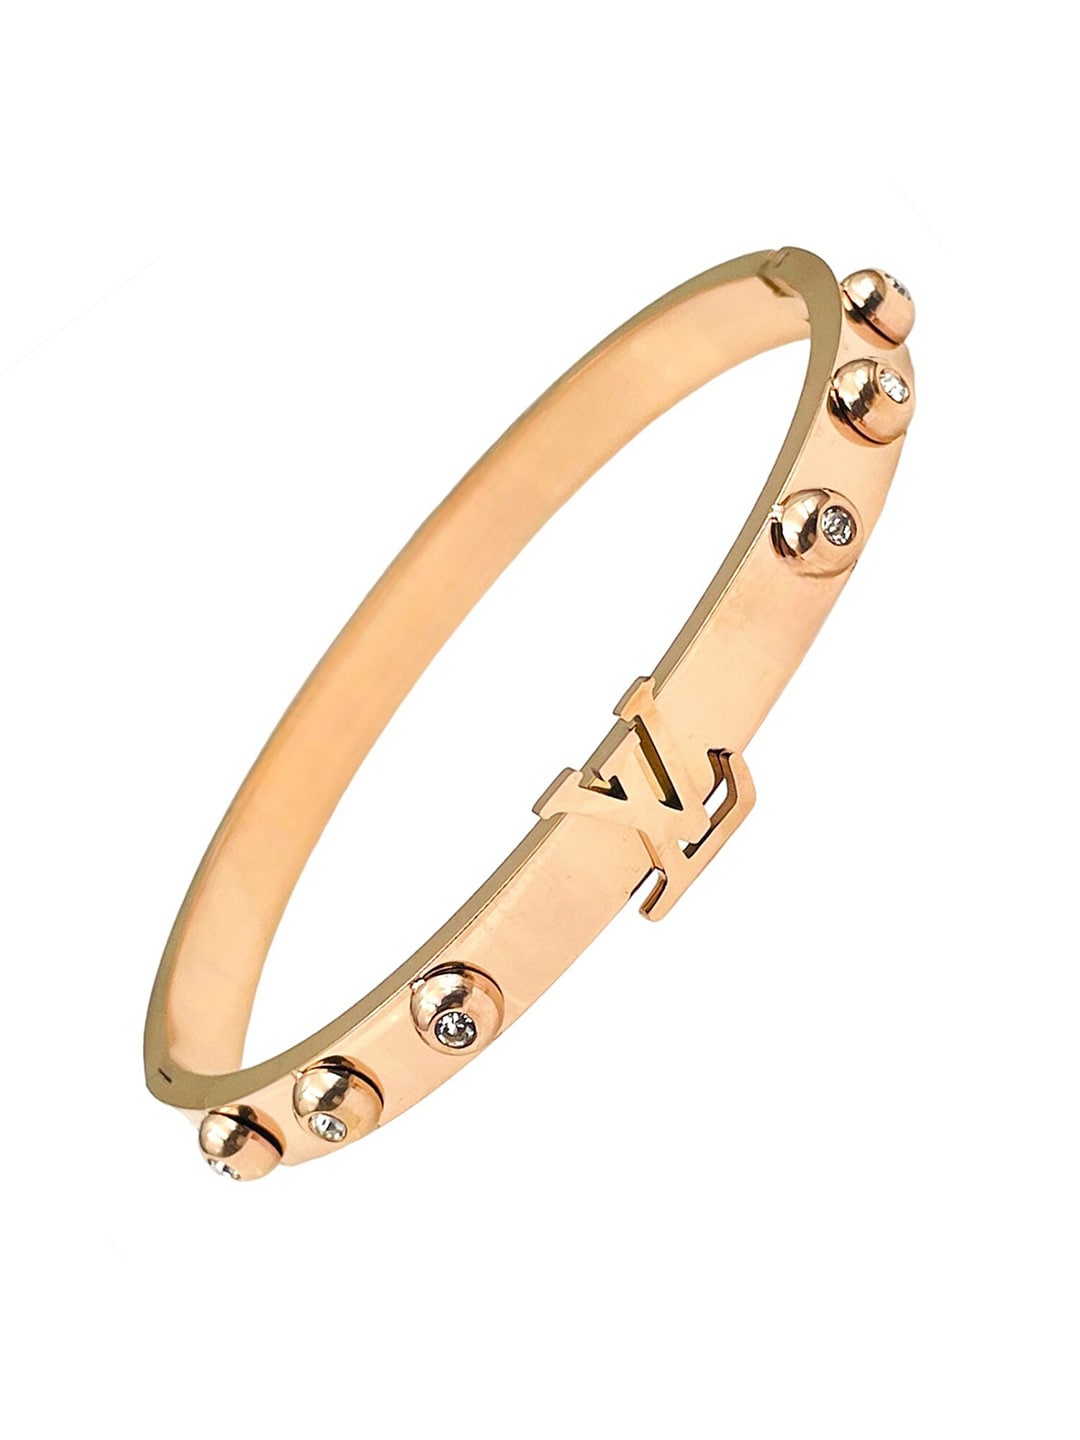 Buy Zivom ZIVOM Women Rose Gold-Plated Cubic Zirconia Bangle-Style Bracelet  at Redfynd